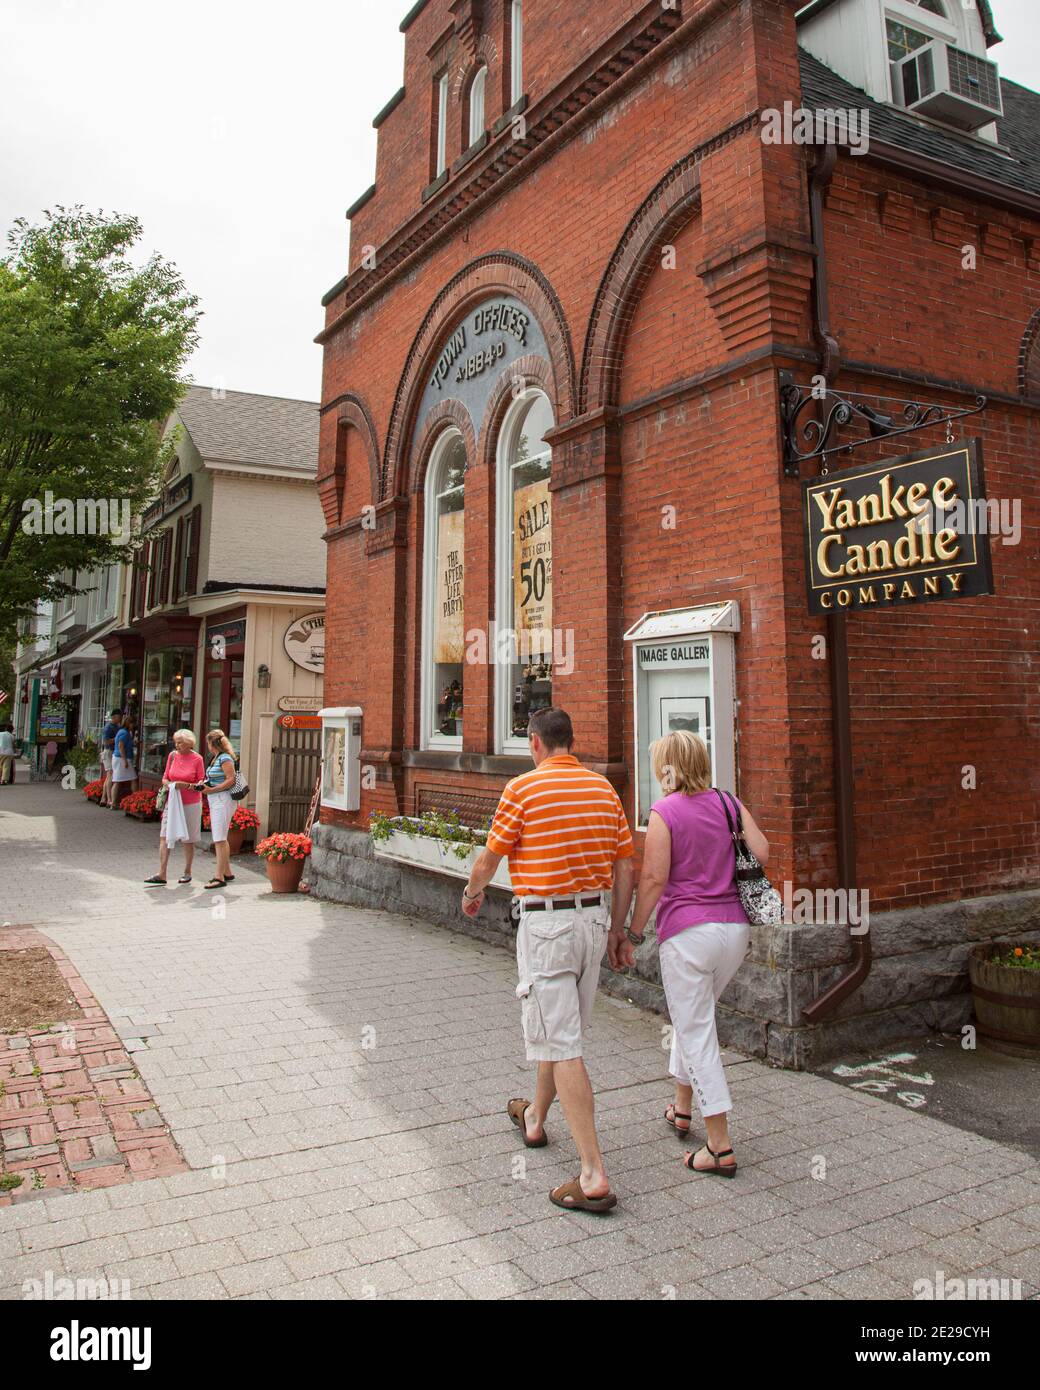 A couple walking past the Yankee Candle Store in Stockbridge, Massachusetts Stock Photo